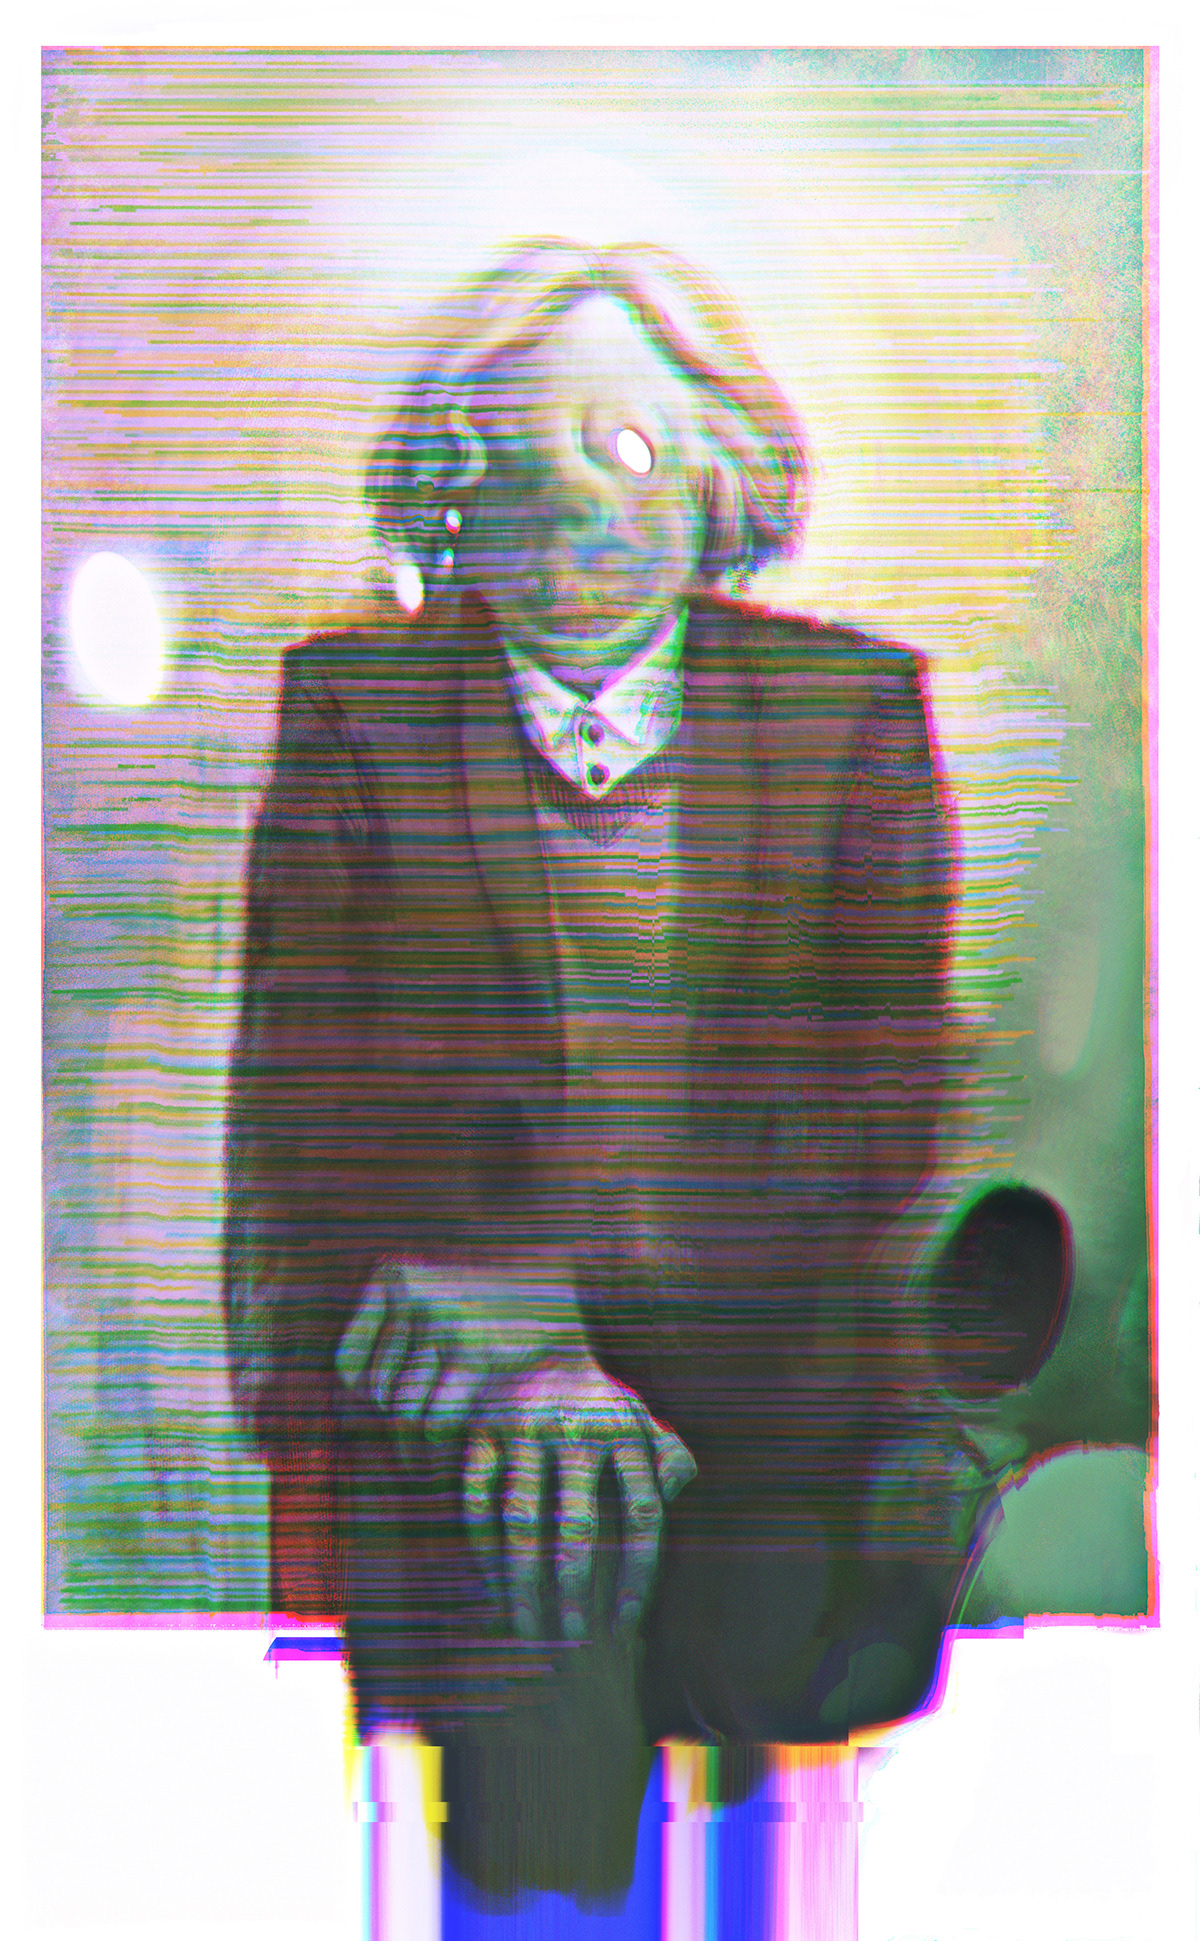 #art Glitch glitched colorful digital corrupt datamashing portrait surreal old man hands realistic